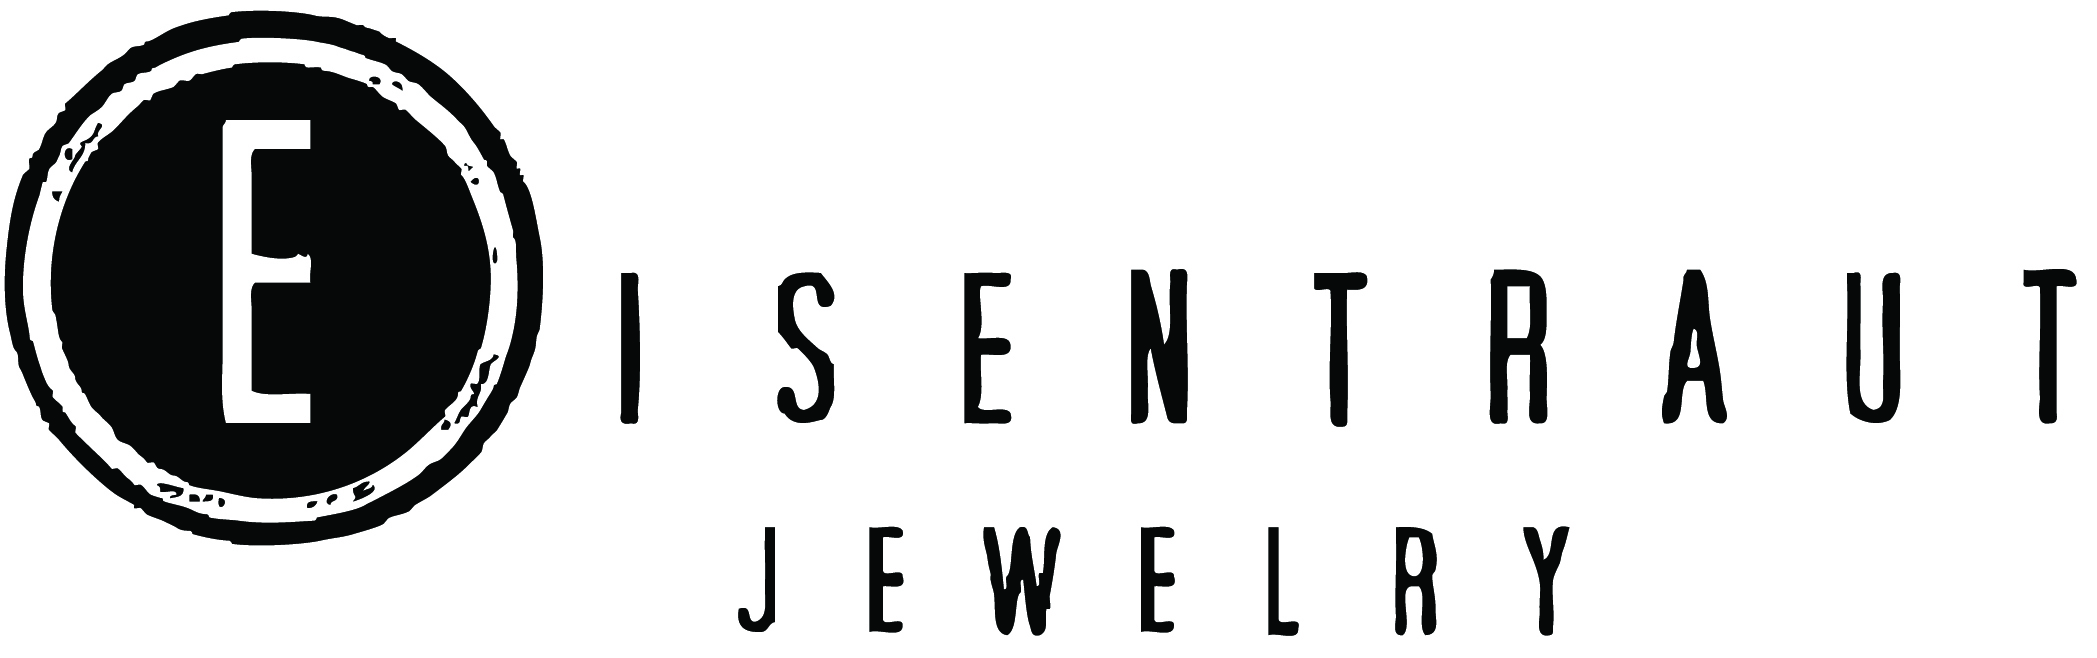 Eisentraut Jewelry